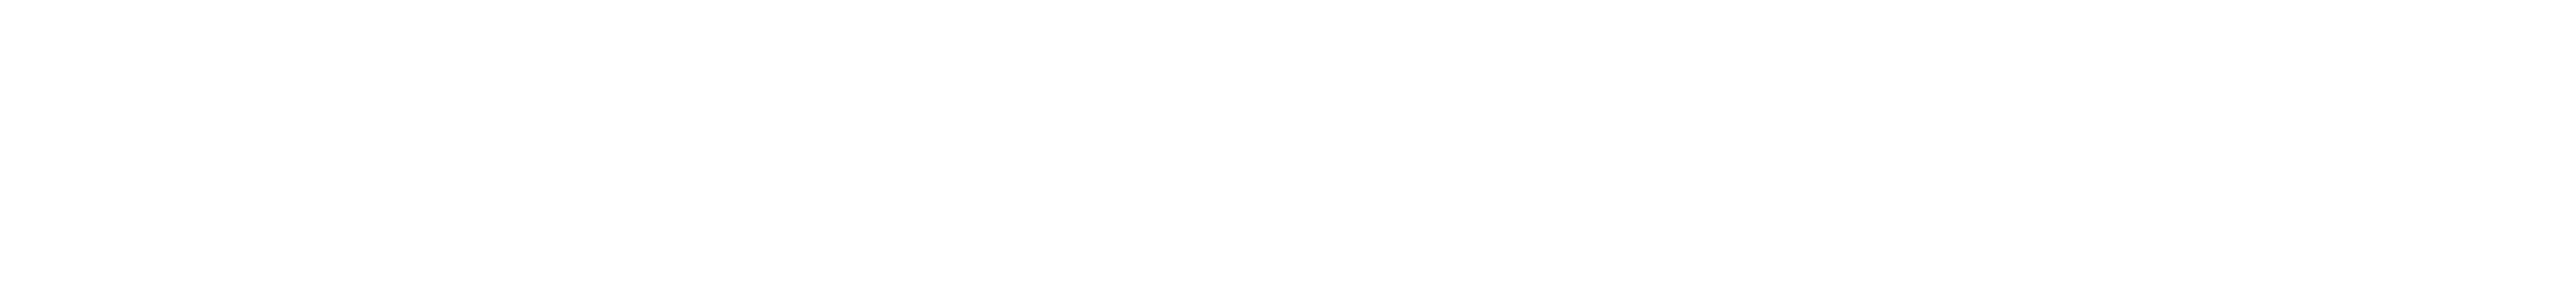 Evangeline logo